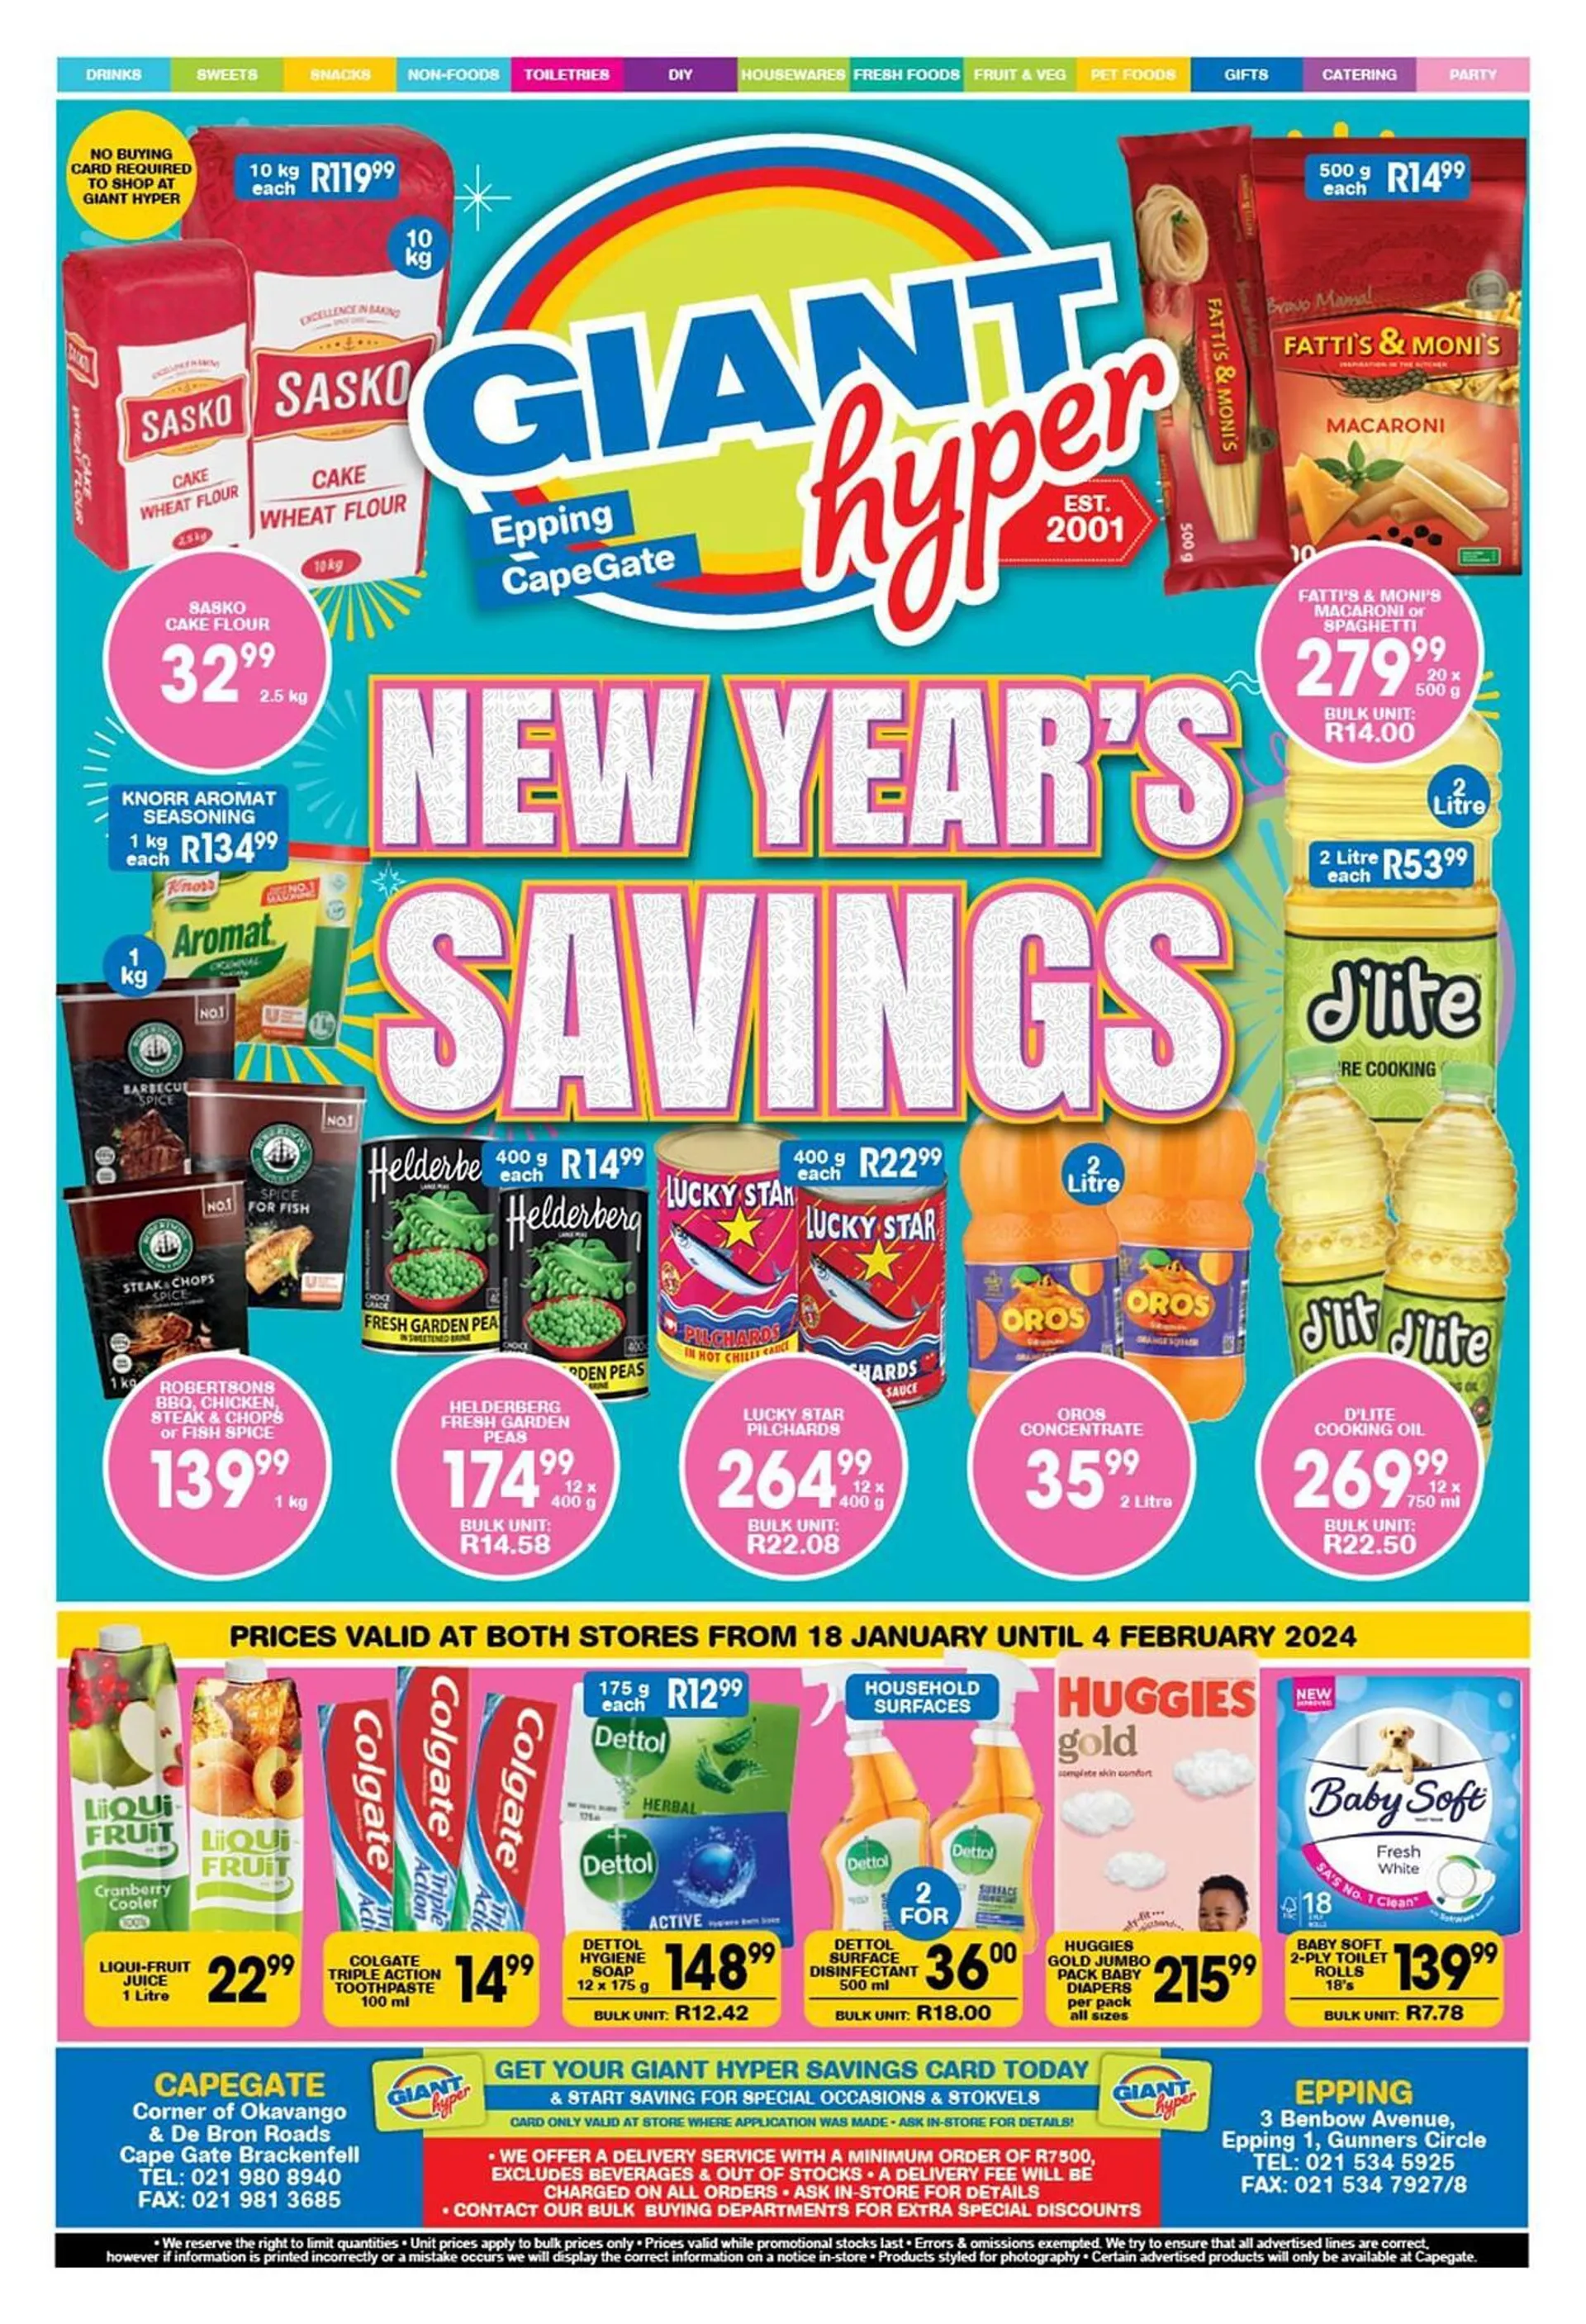 Giant Hyper catalogue - 19 January 4 February 2024 - Page 1